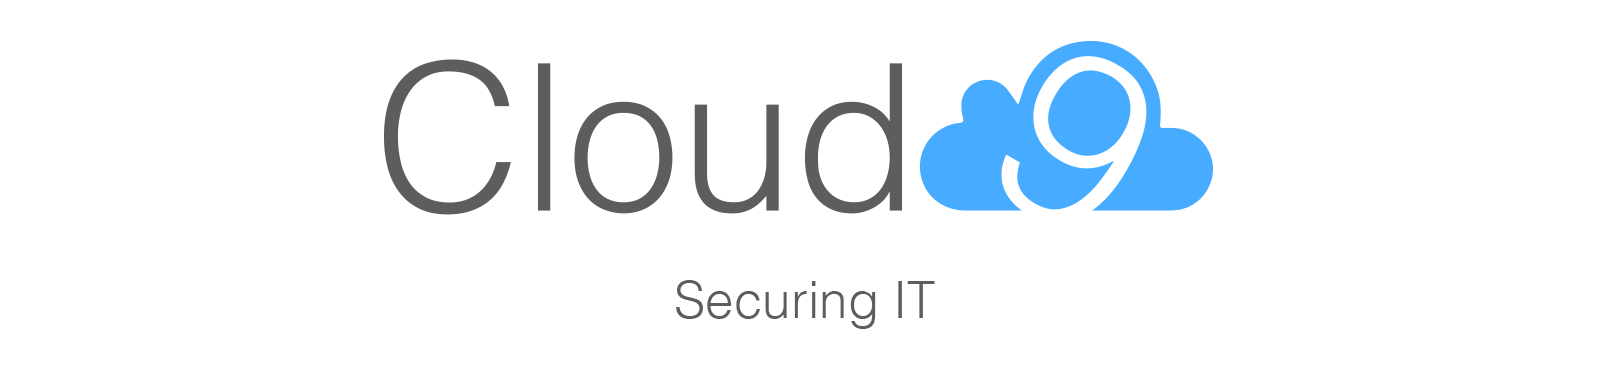 Cloud9 Securing IT